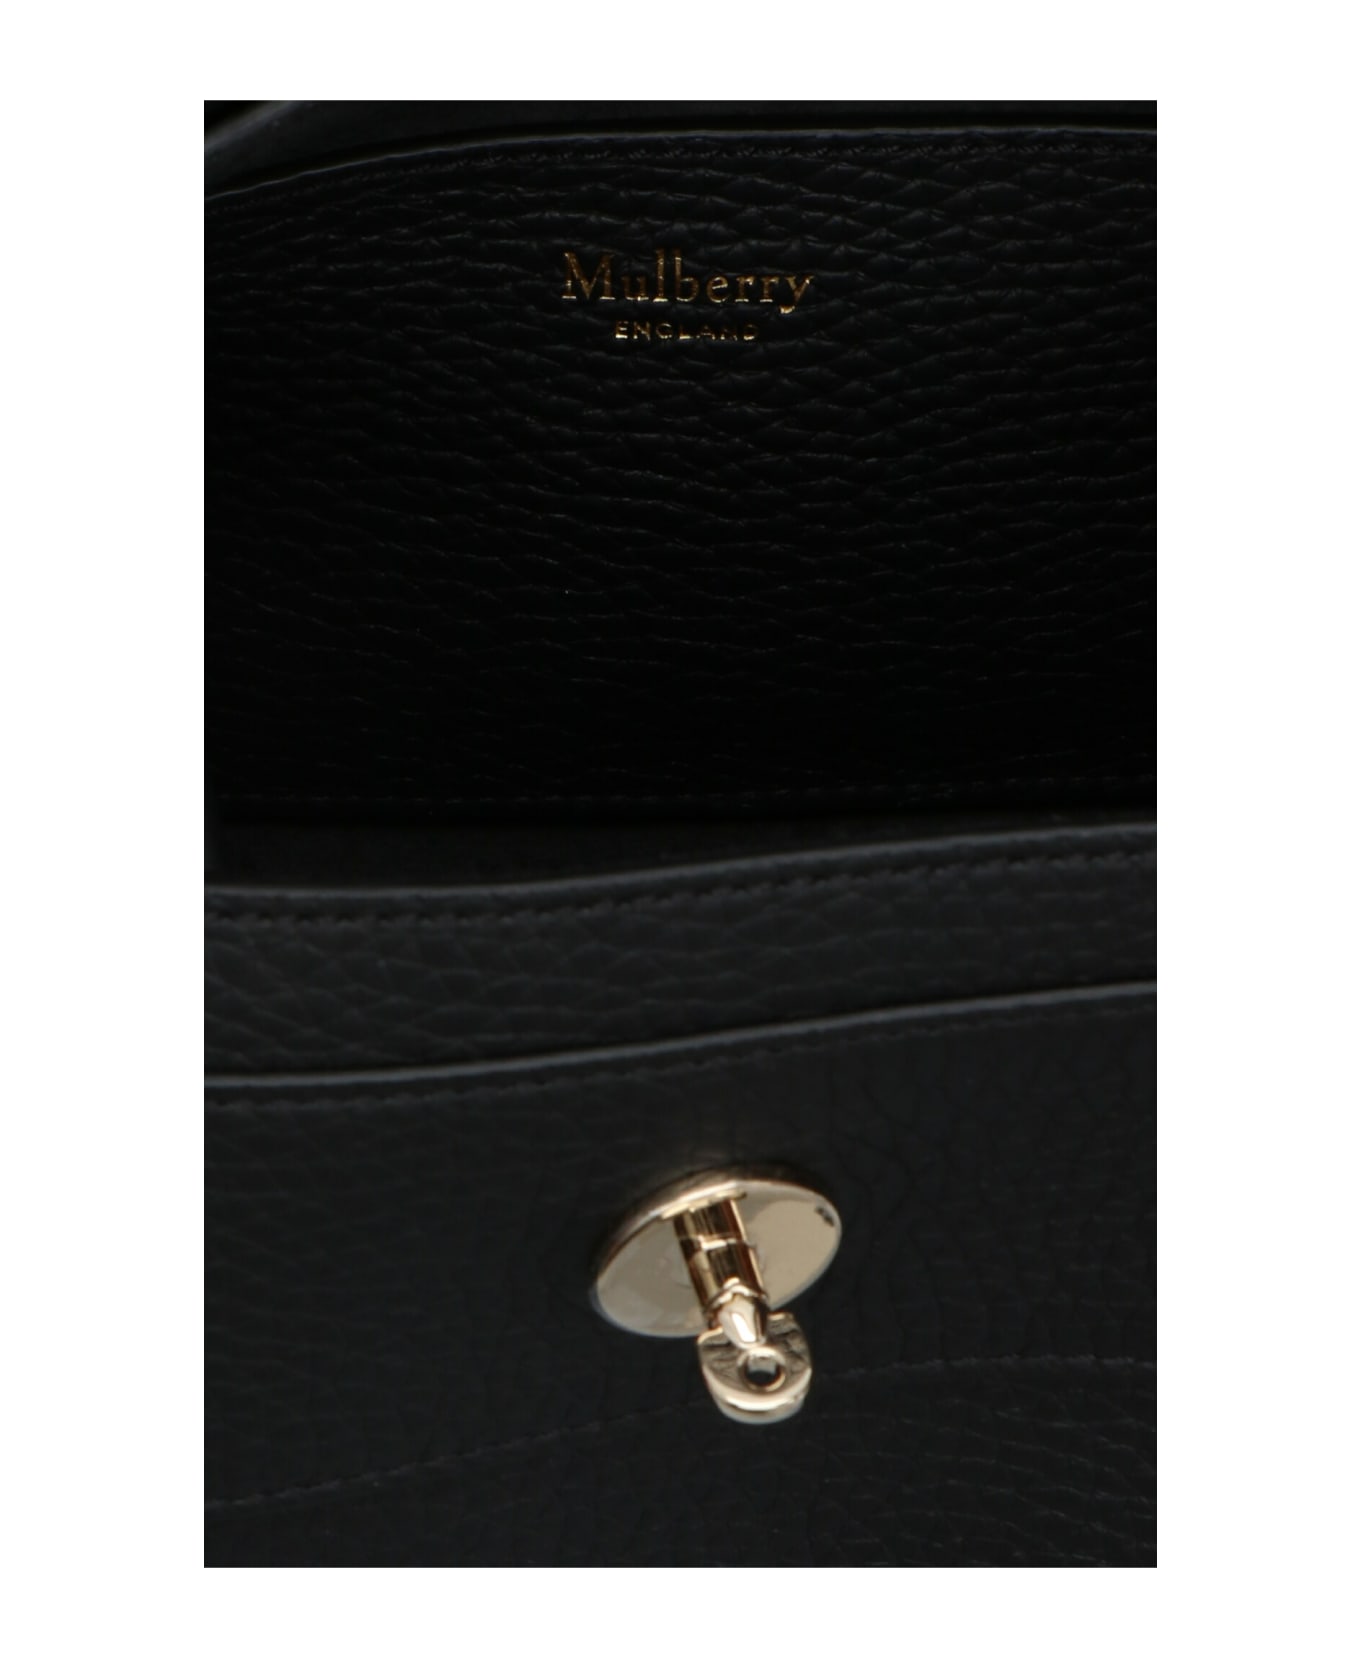 Mulberry 'alexa' Mini Handbag - Black  